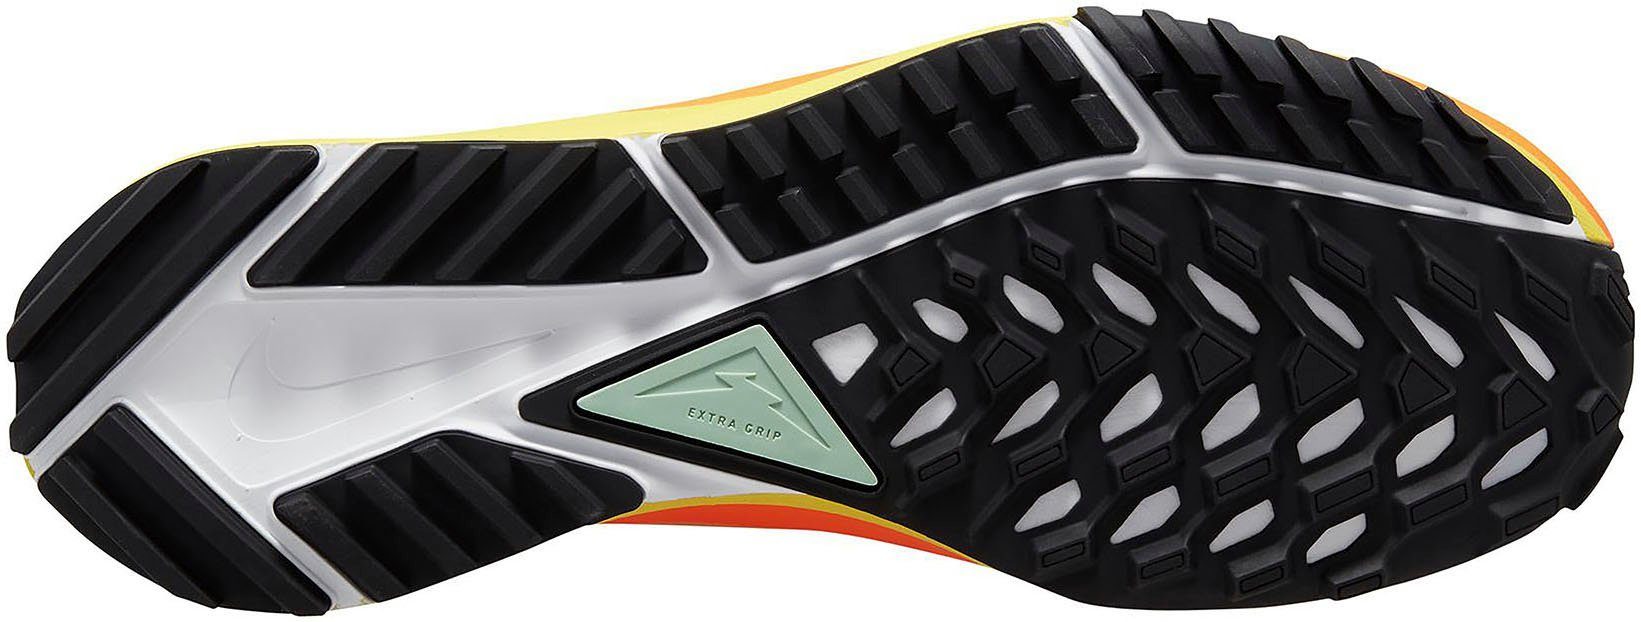 Nike Laufschuh BARELY-GRAPE-TOTAL-ORANGE-BARELY-GREEN GORE-TEX TRAIL WATERPROO 4 wasserdicht PEGASUS